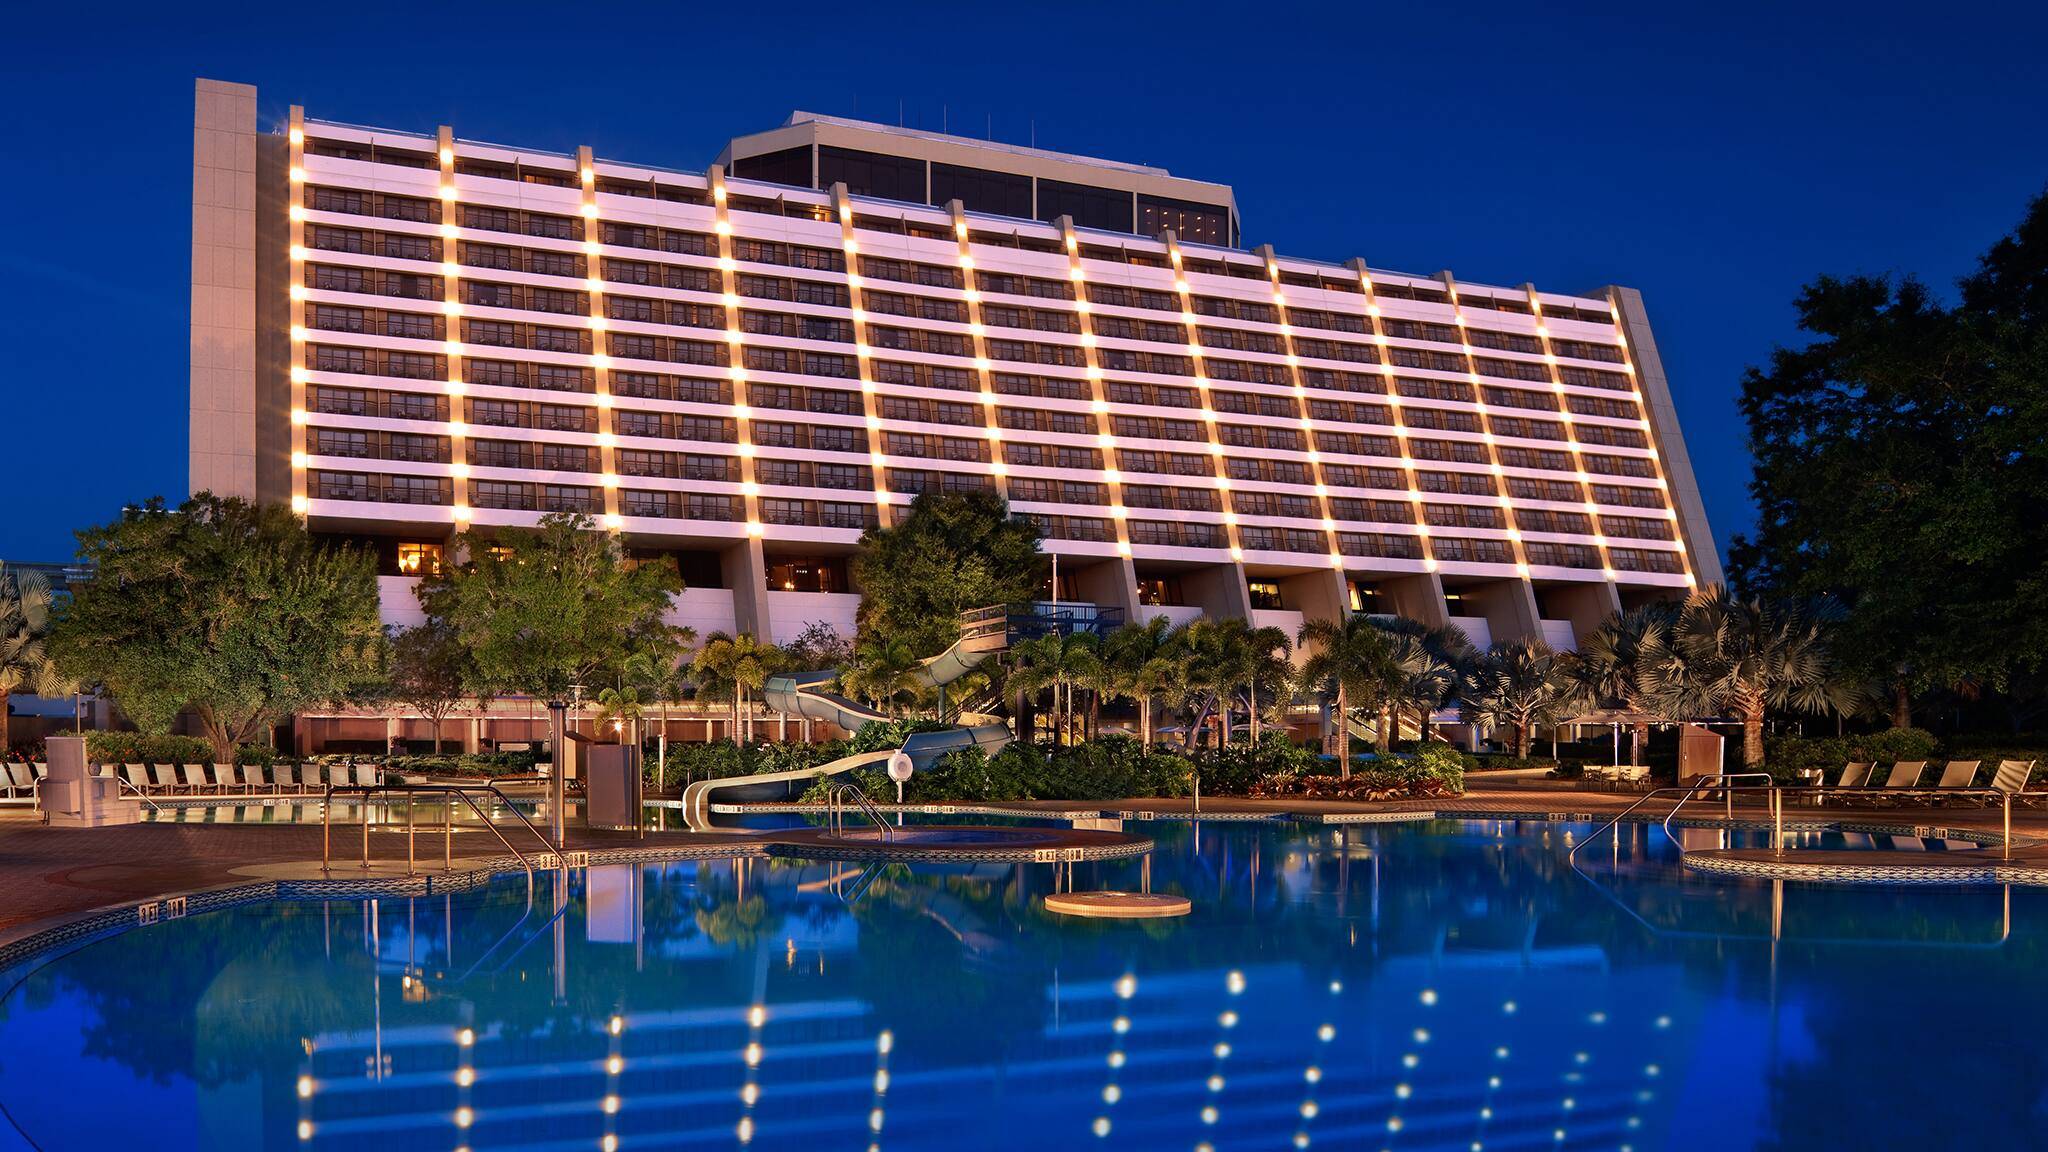 Disney's Contemporary Resort feature pool